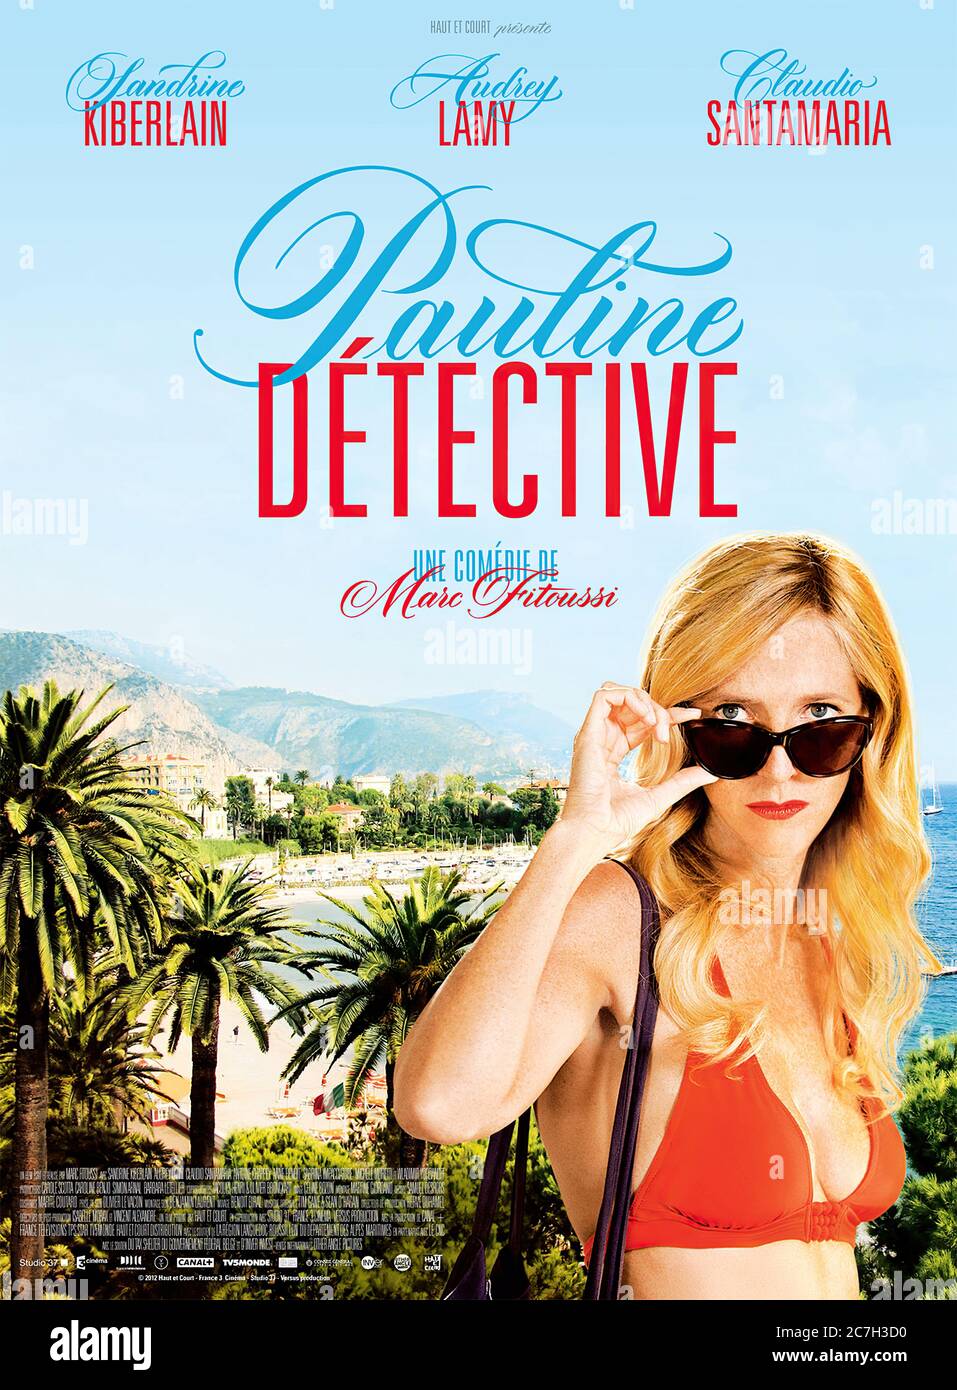 Pauline Détective - Movie Poster Stock Photo